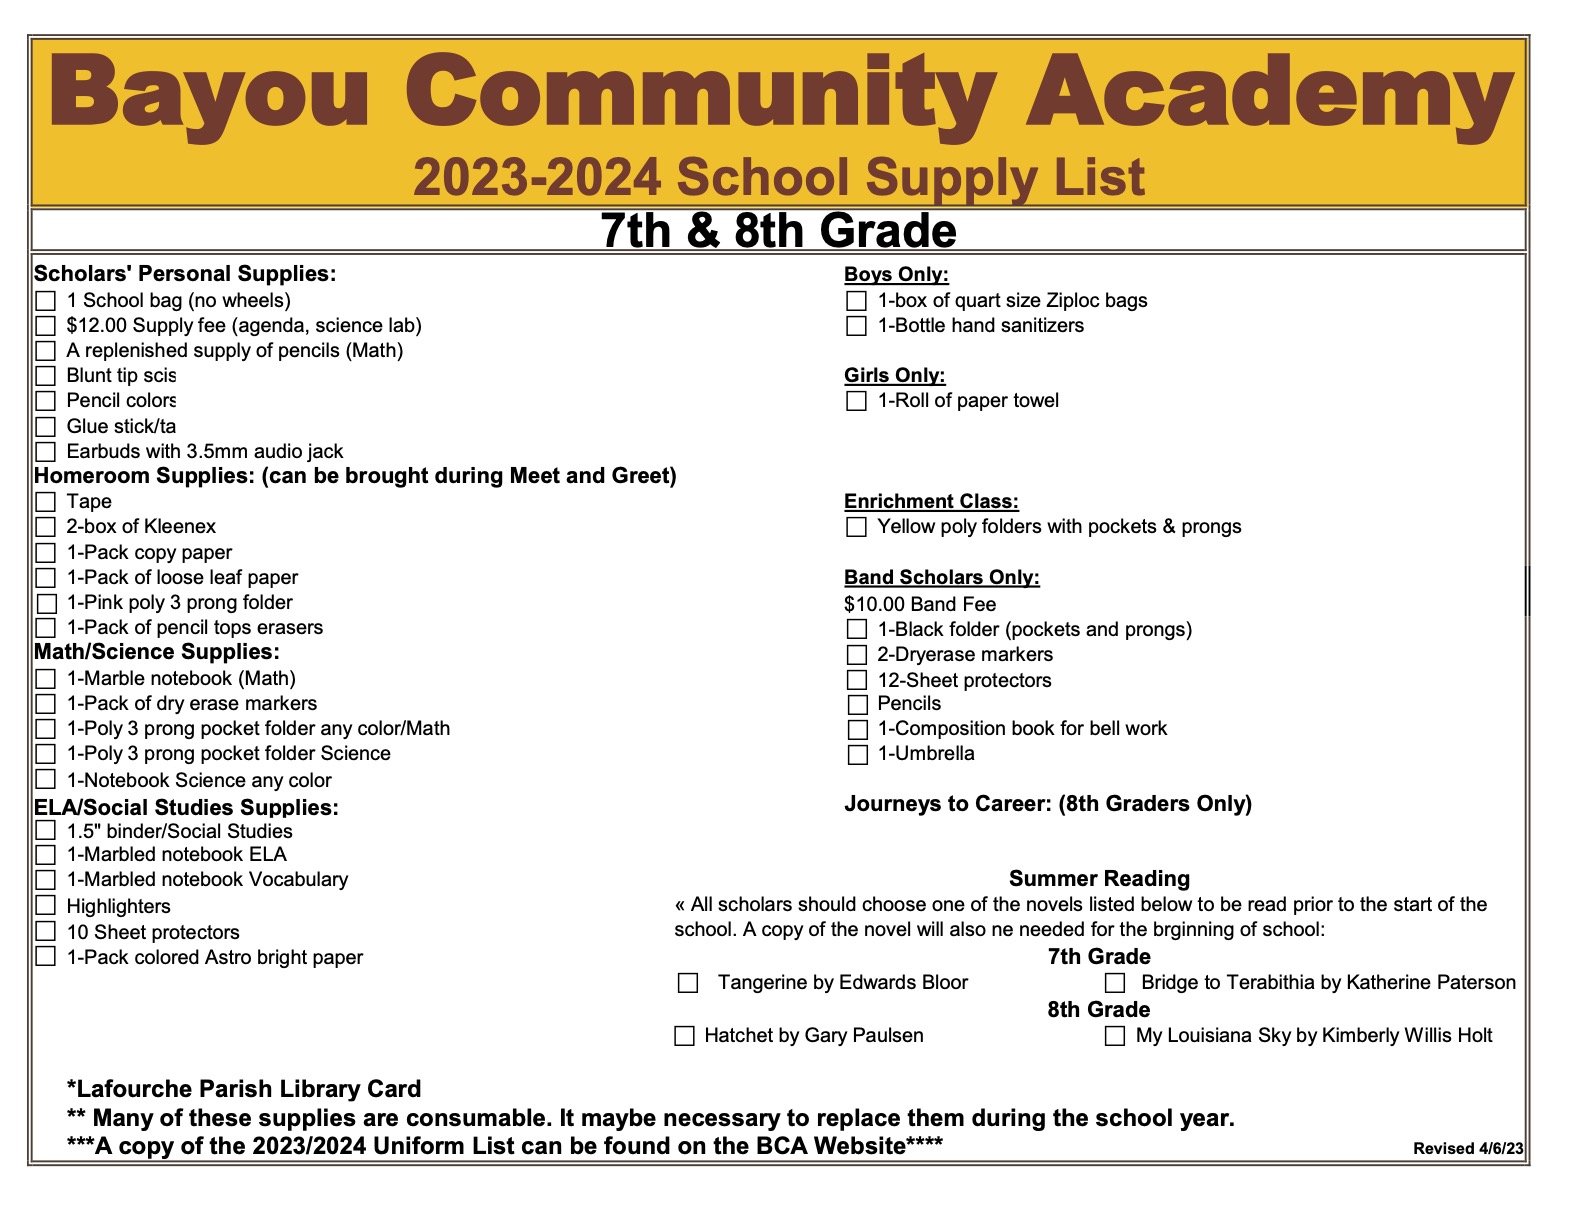 7th & 8th Grade Supply List